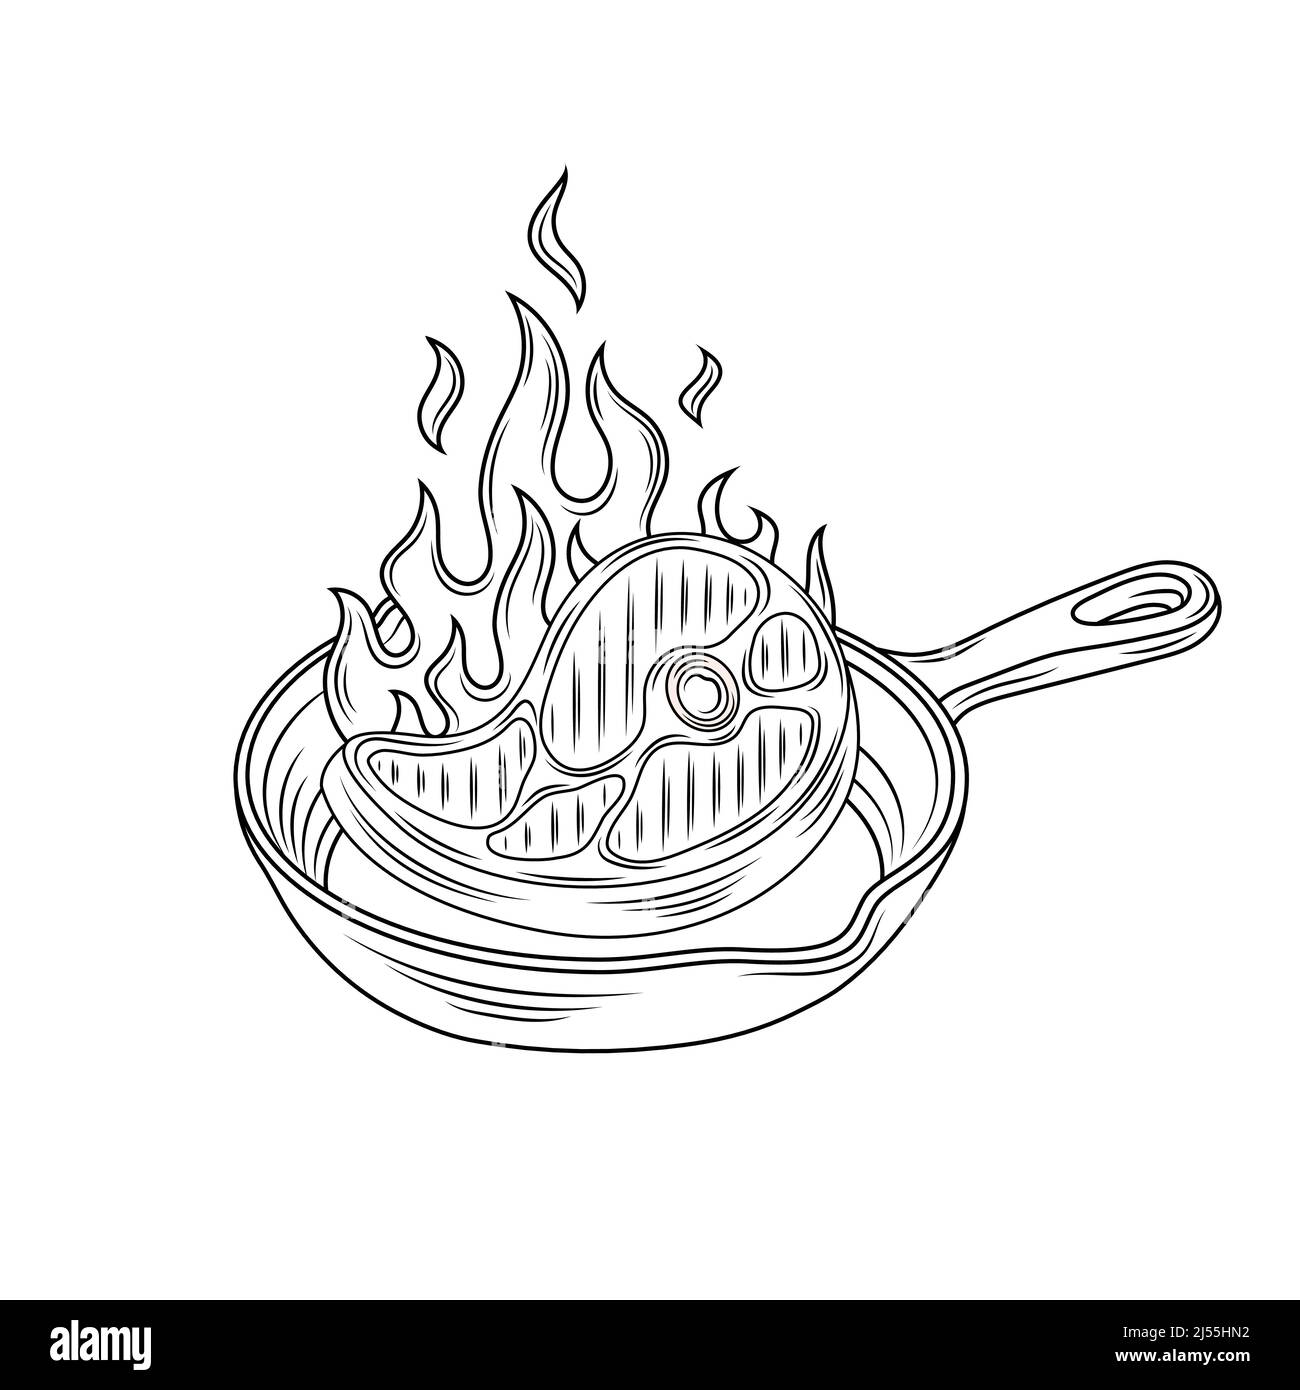 https://c8.alamy.com/comp/2J55HN2/hot-pan-steak-with-meat-on-fire-sketch-2J55HN2.jpg